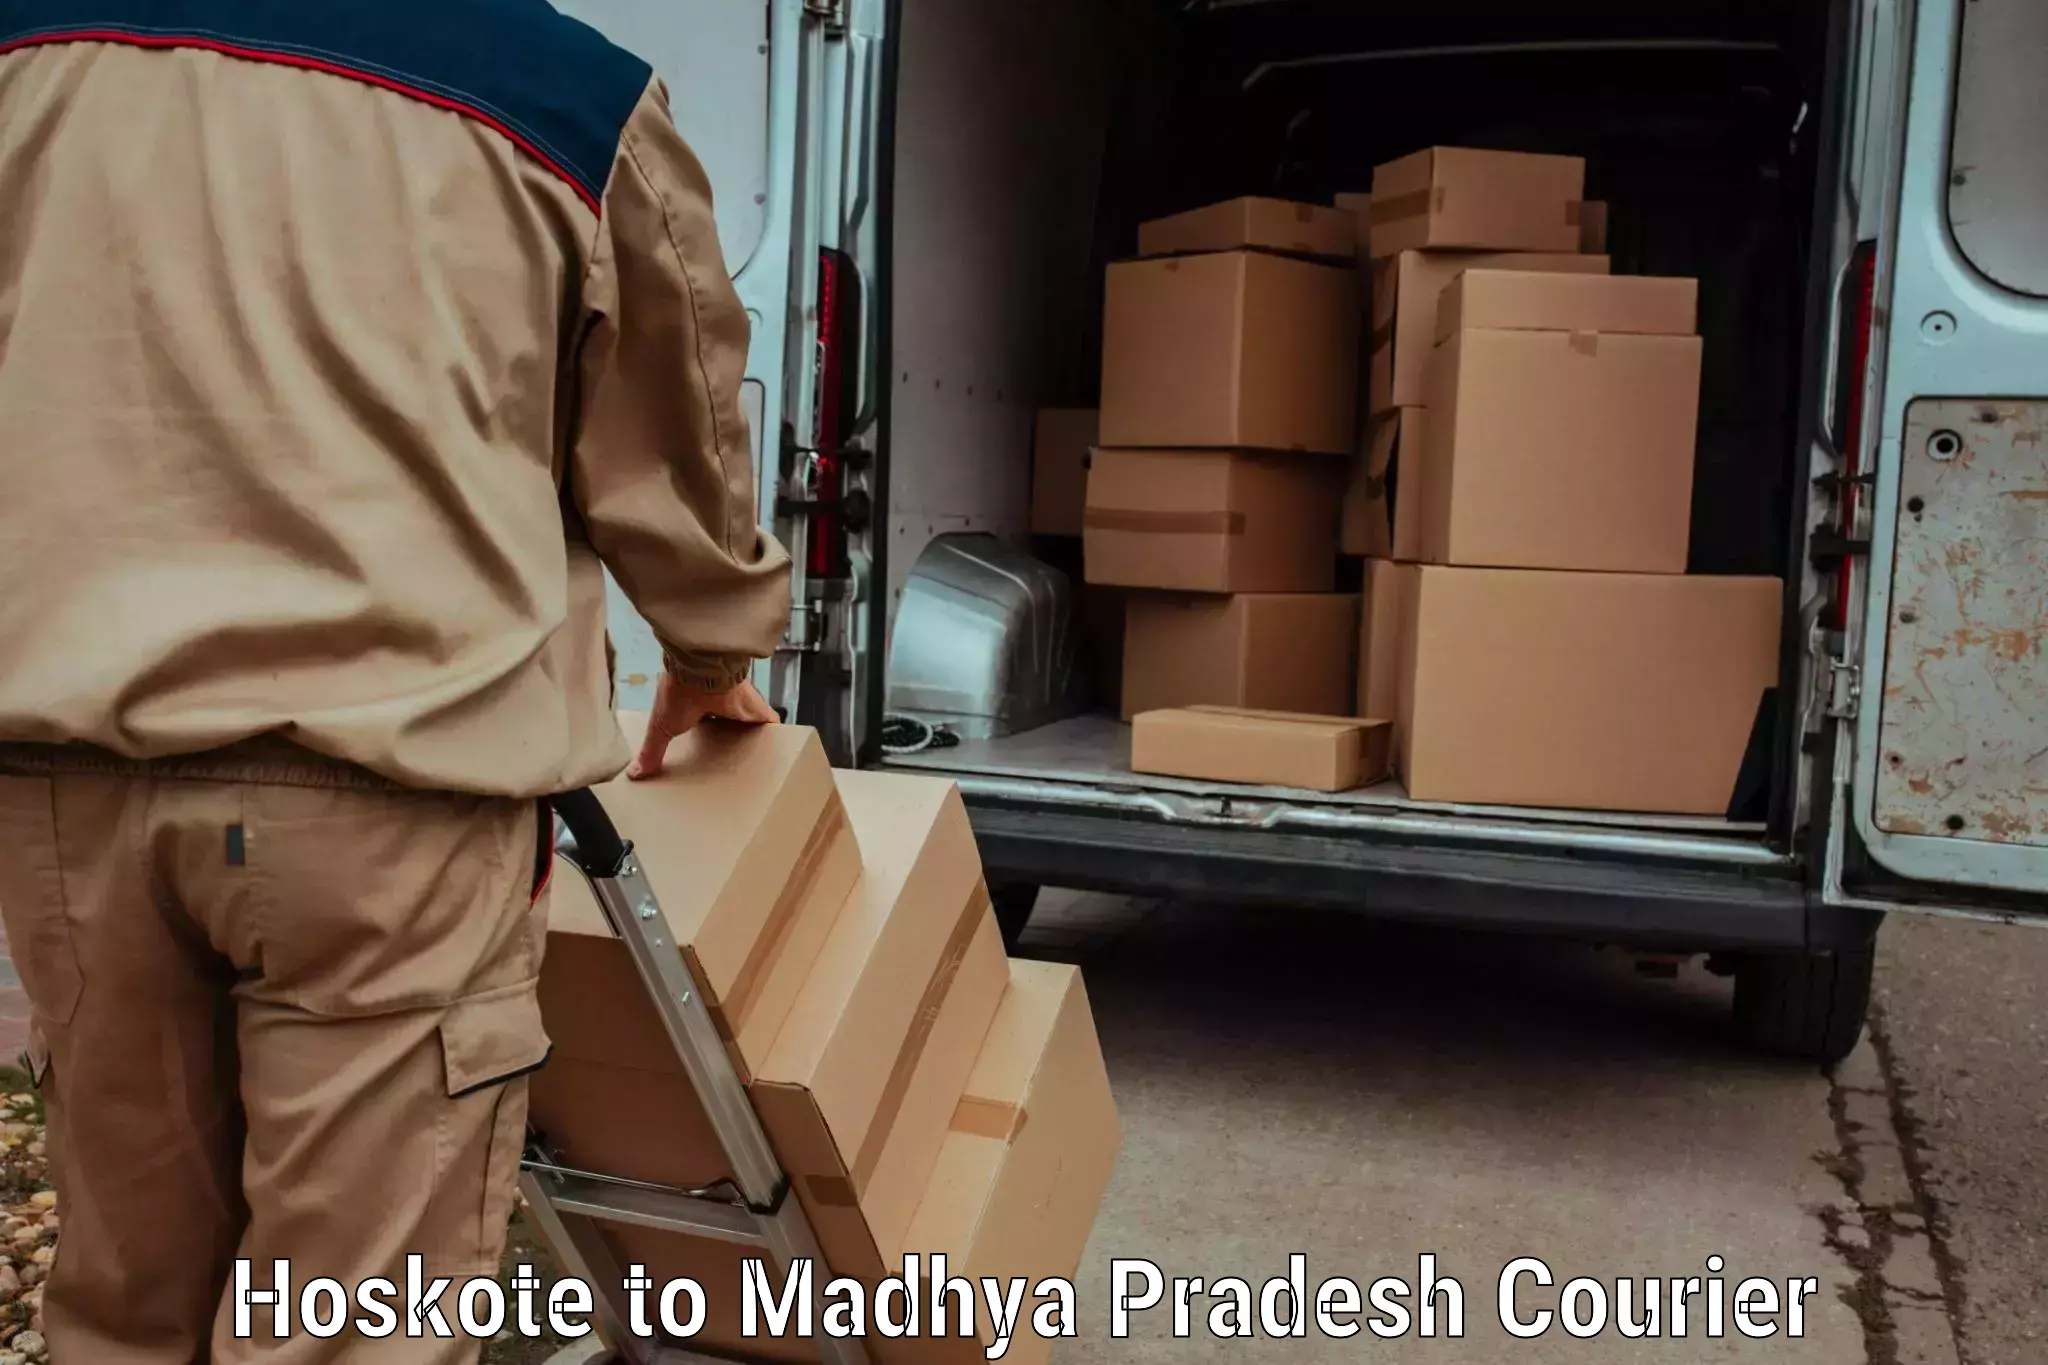 Doorstep delivery service Hoskote to Rajendragram